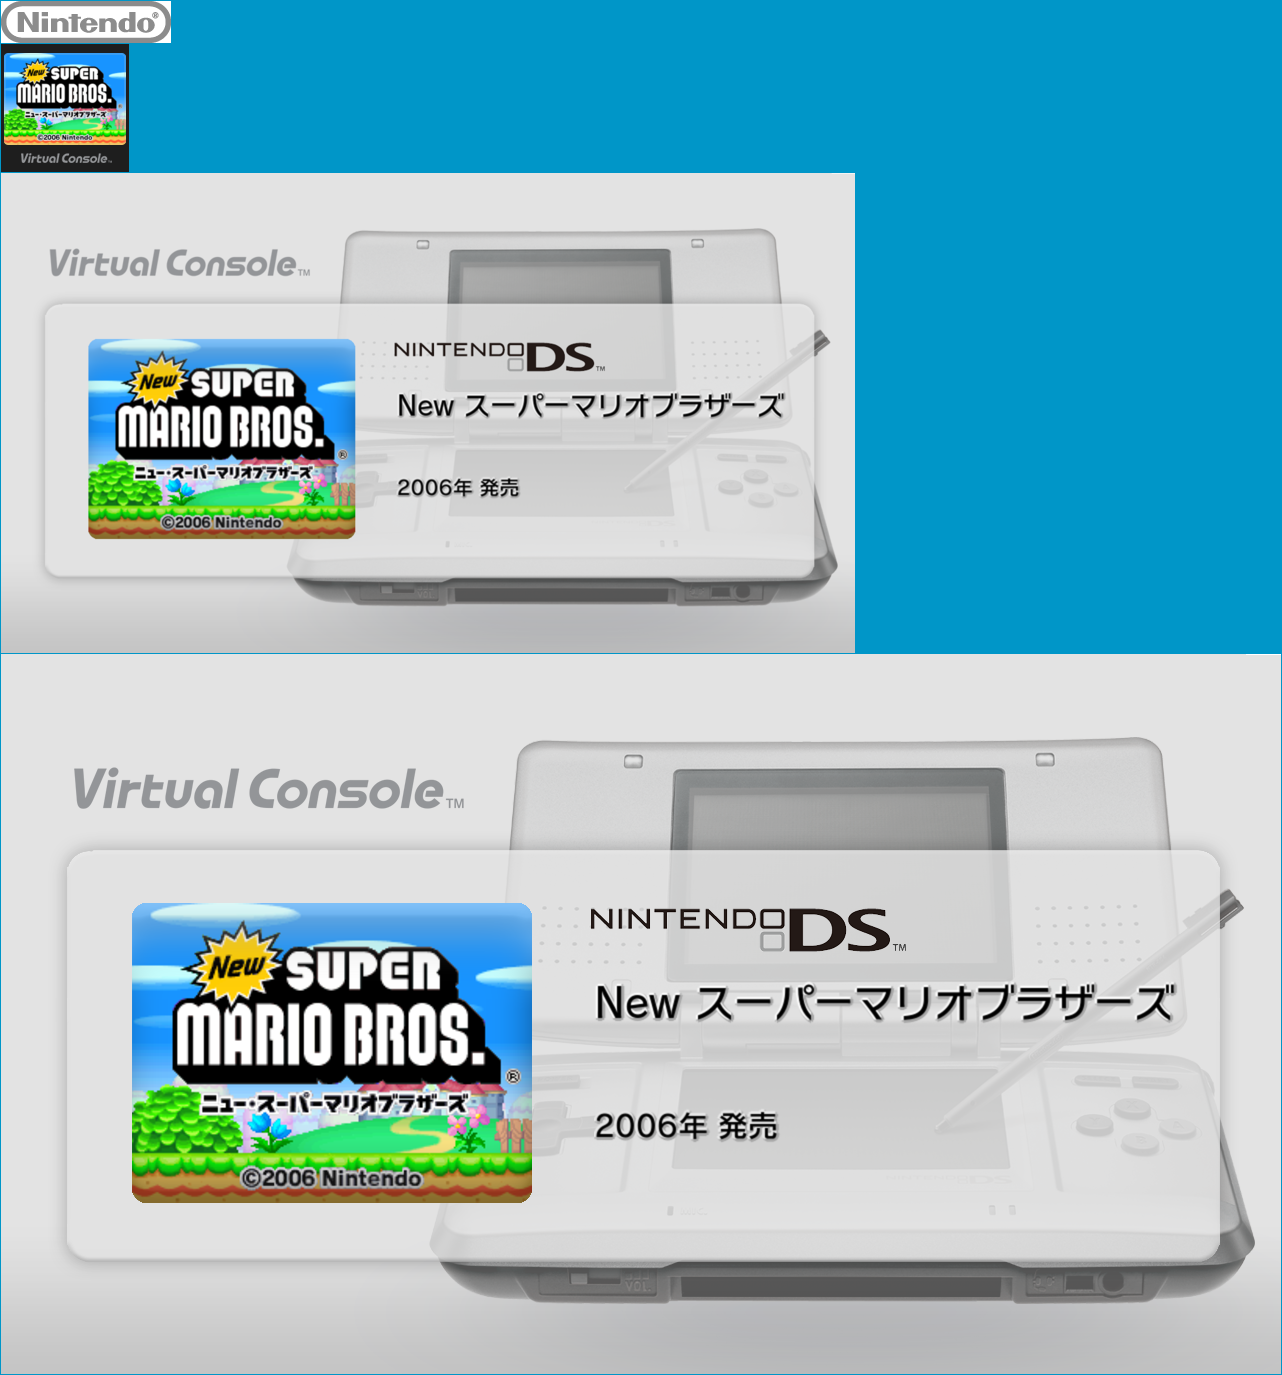 Virtual Console - New Super Mario Bros.